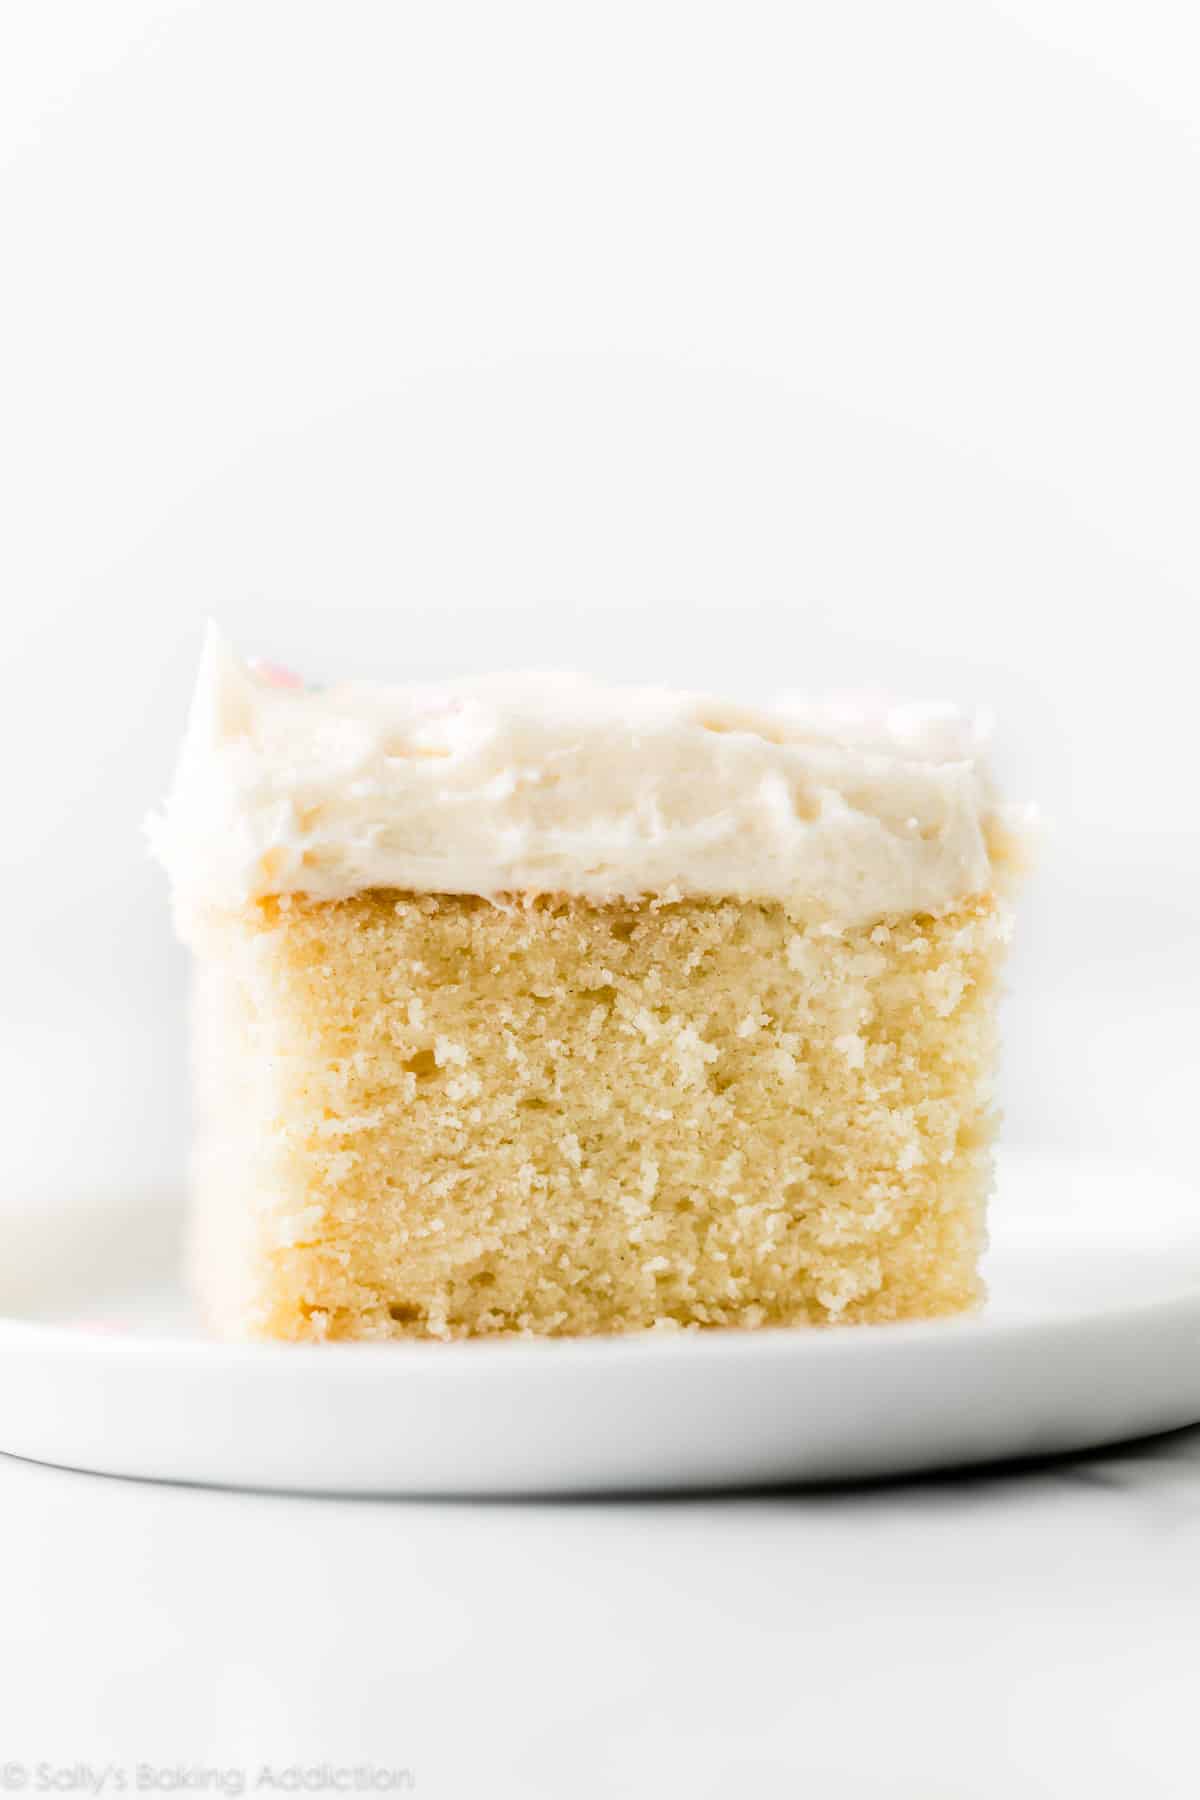 vanilla sheet cake slice on a white plate